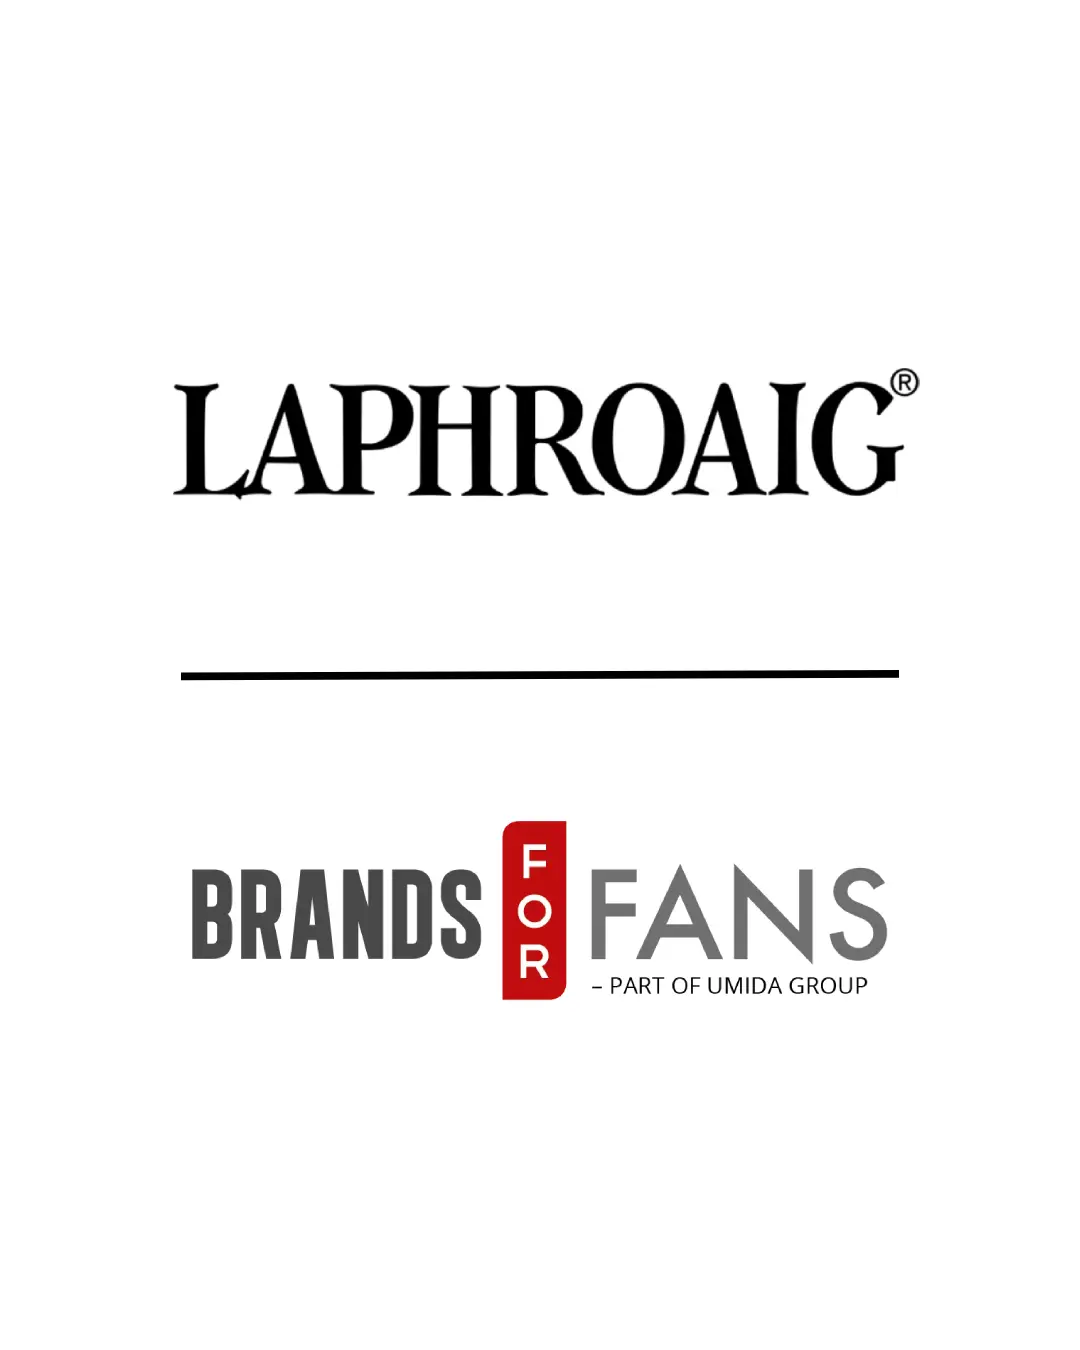 Brands like Laphroaig and Brands for Fans.